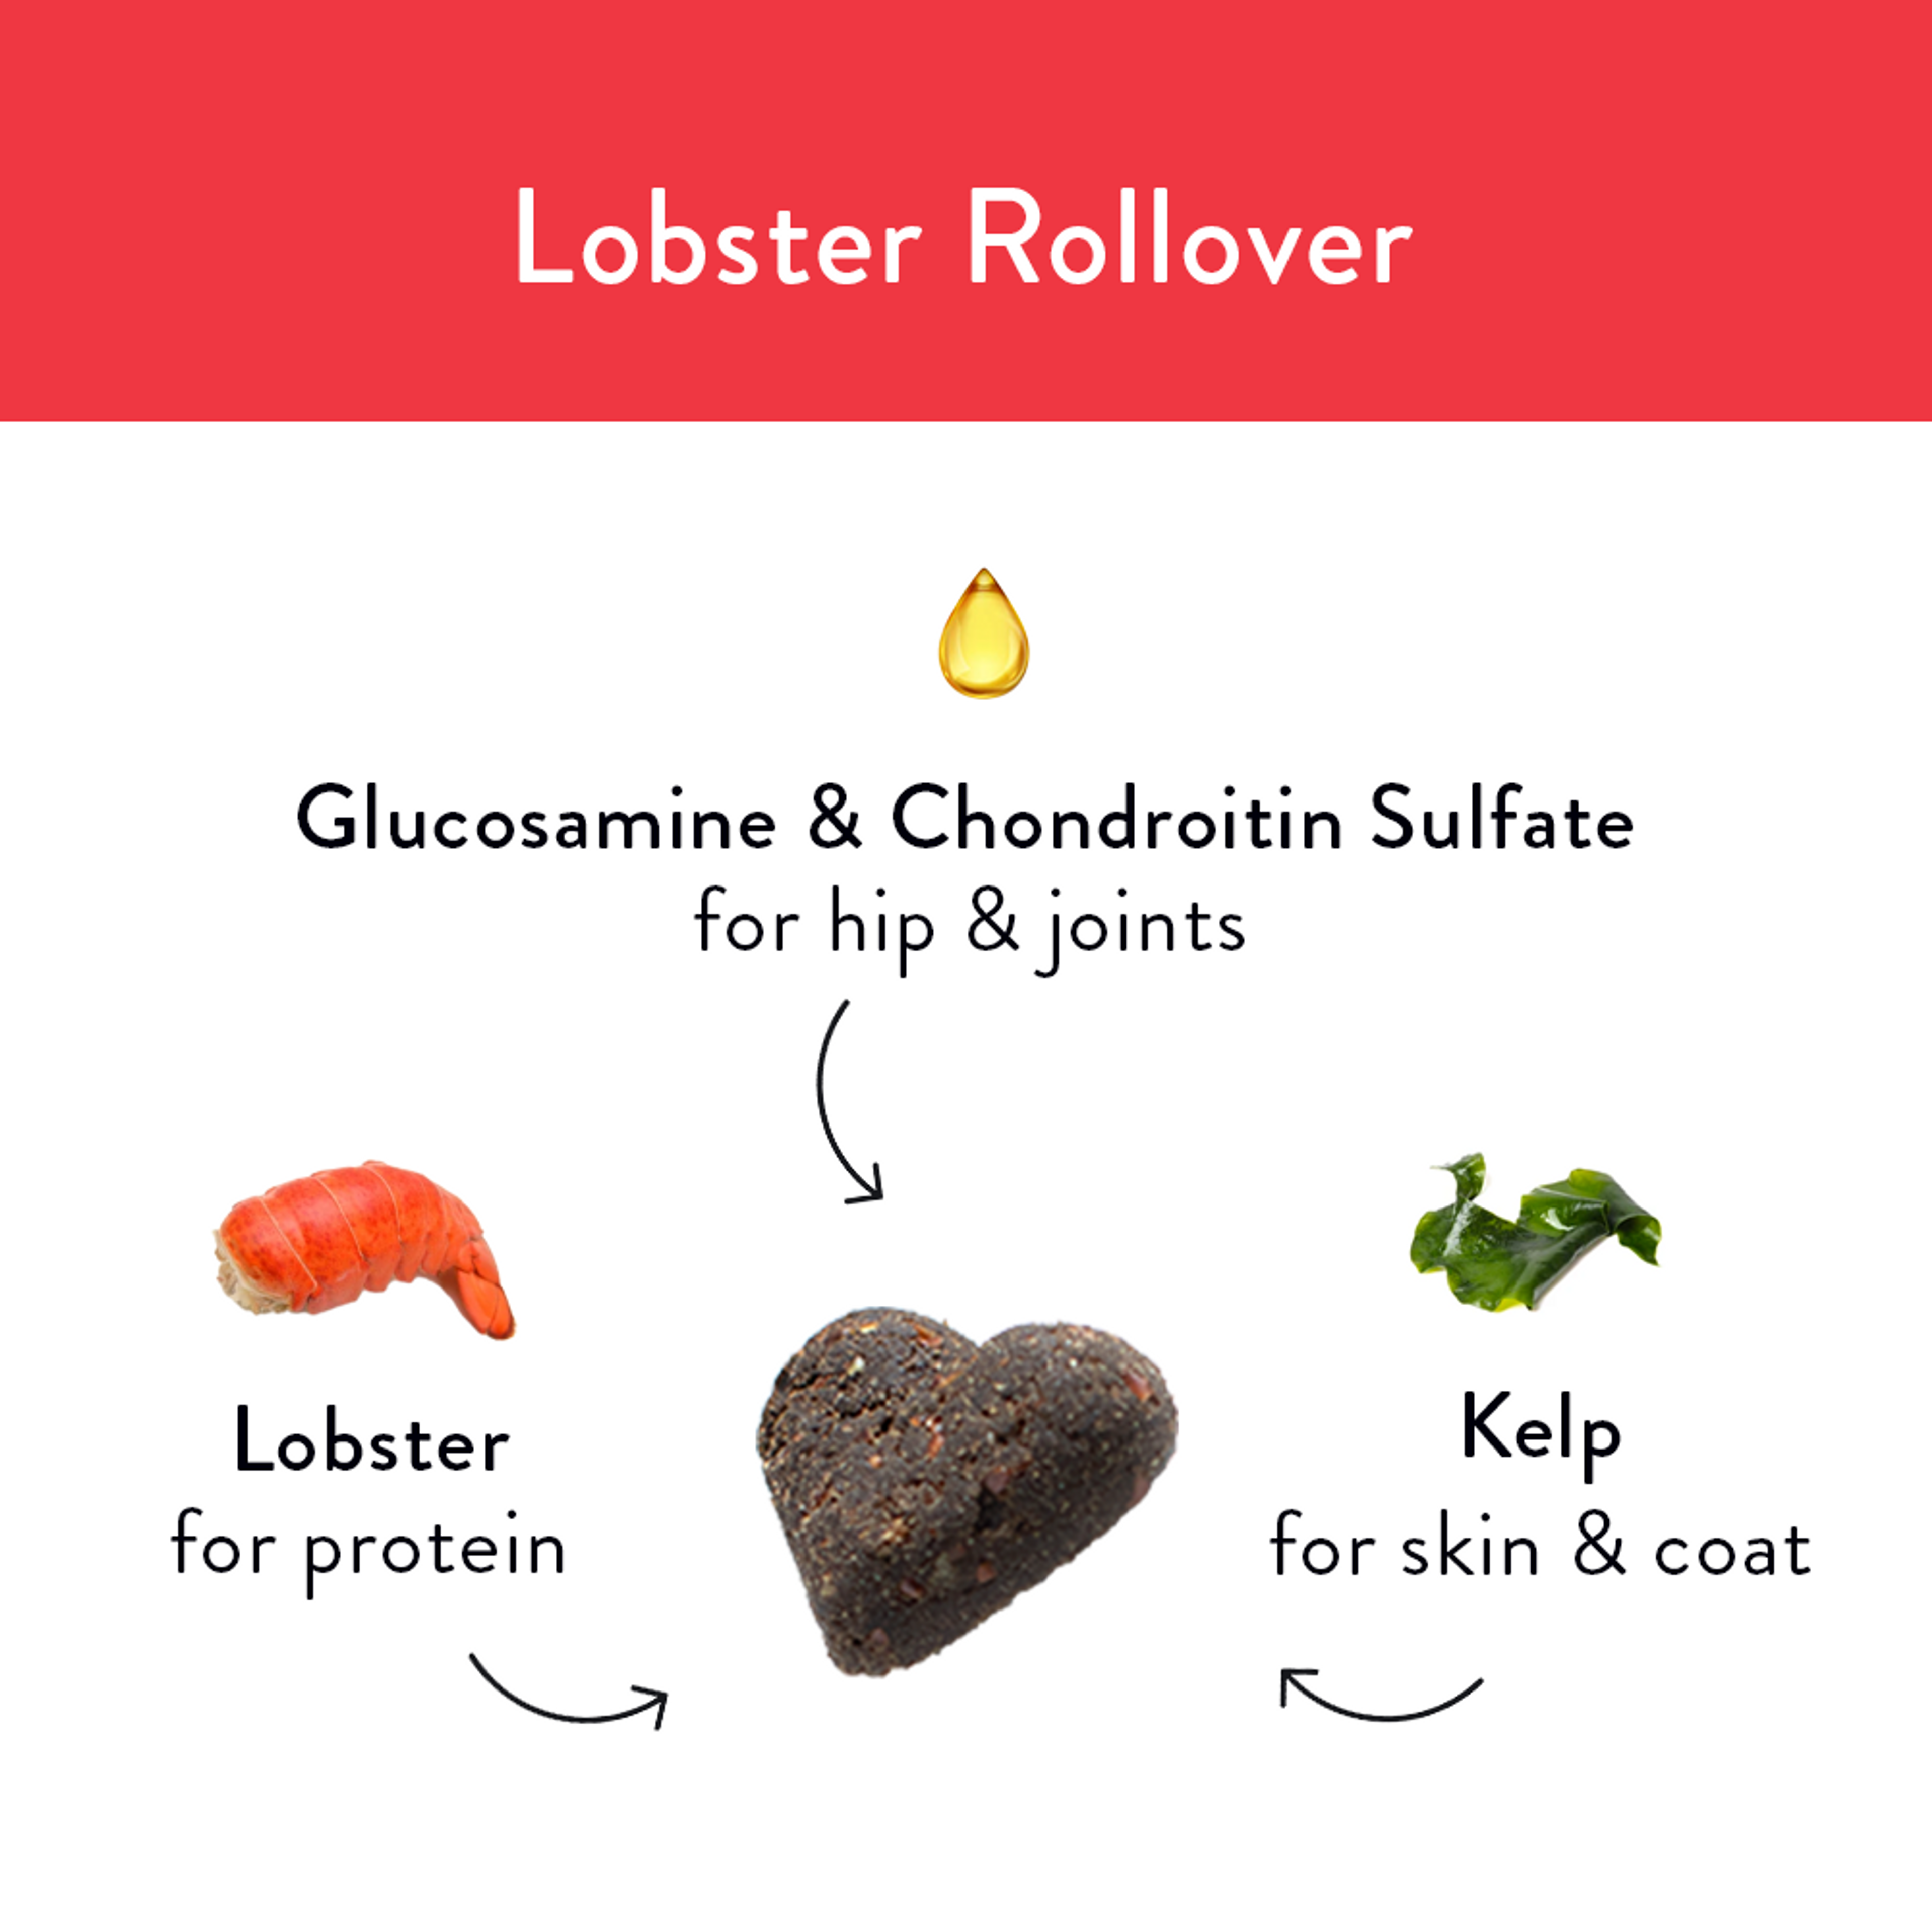 Lobster Roll(Over) Soft Baked